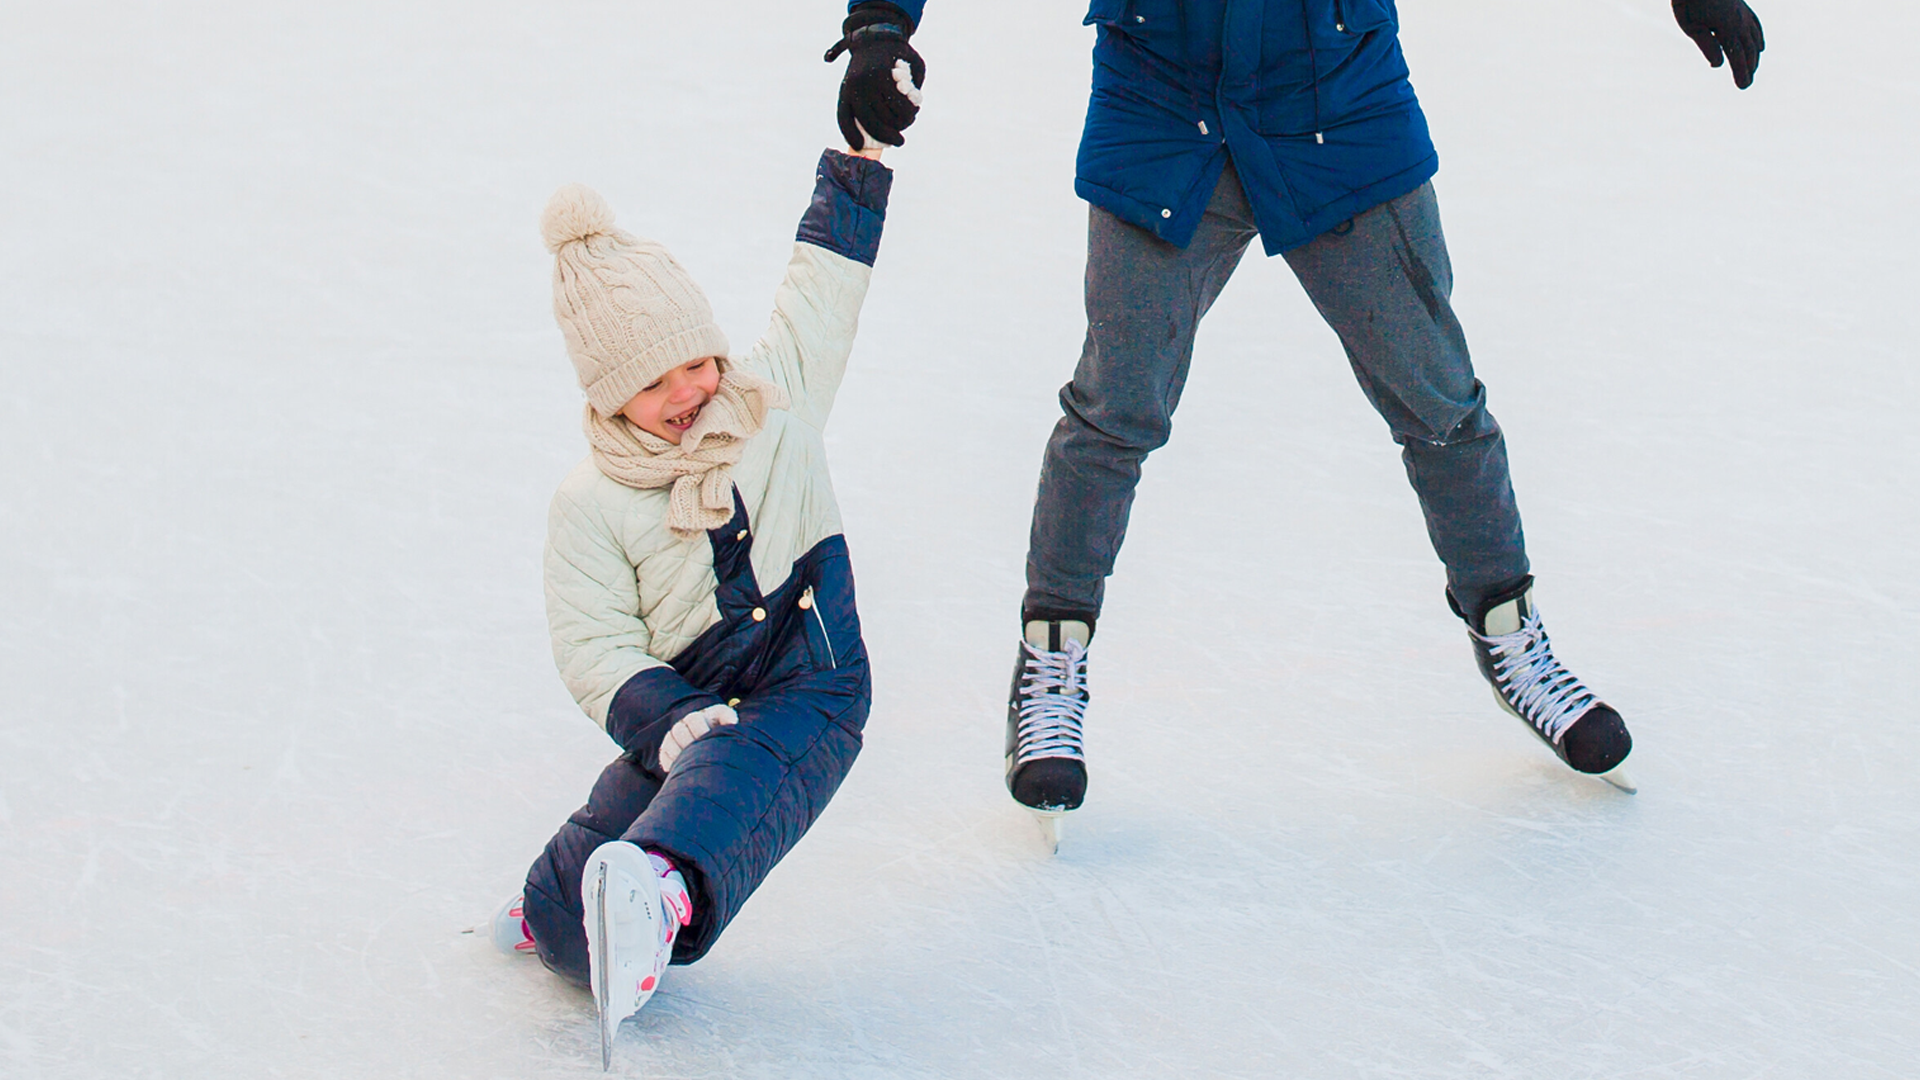 Muskoka family skate shows girl and father enjoying  winter sports outside.